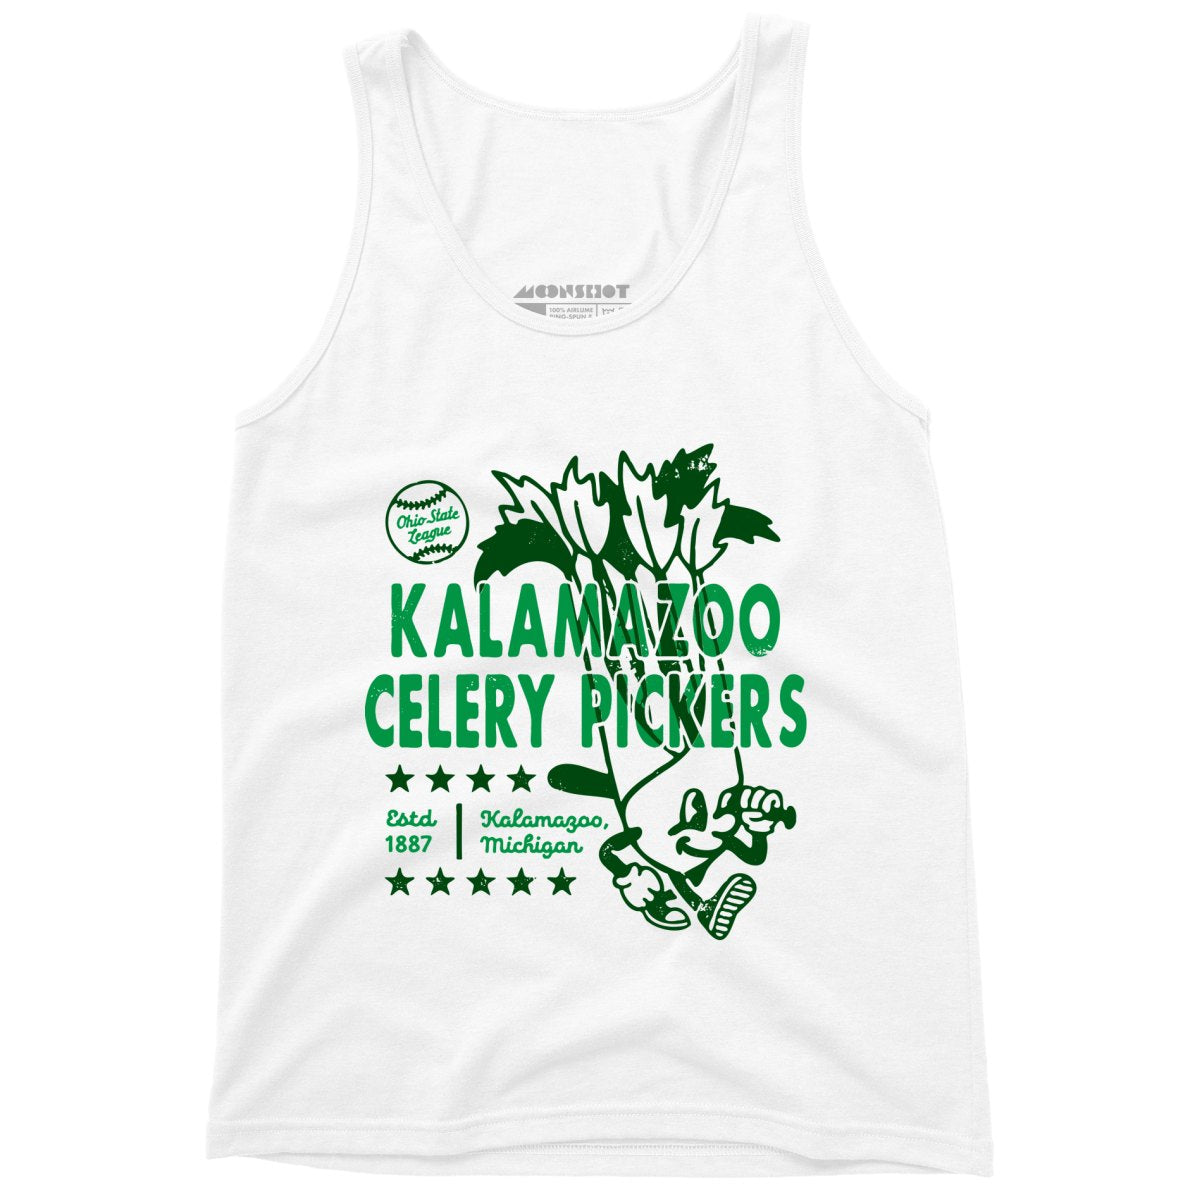 Kalamazoo Celery Pickers - Michigan - Vintage Defunct Baseball Teams - Unisex Tank Top